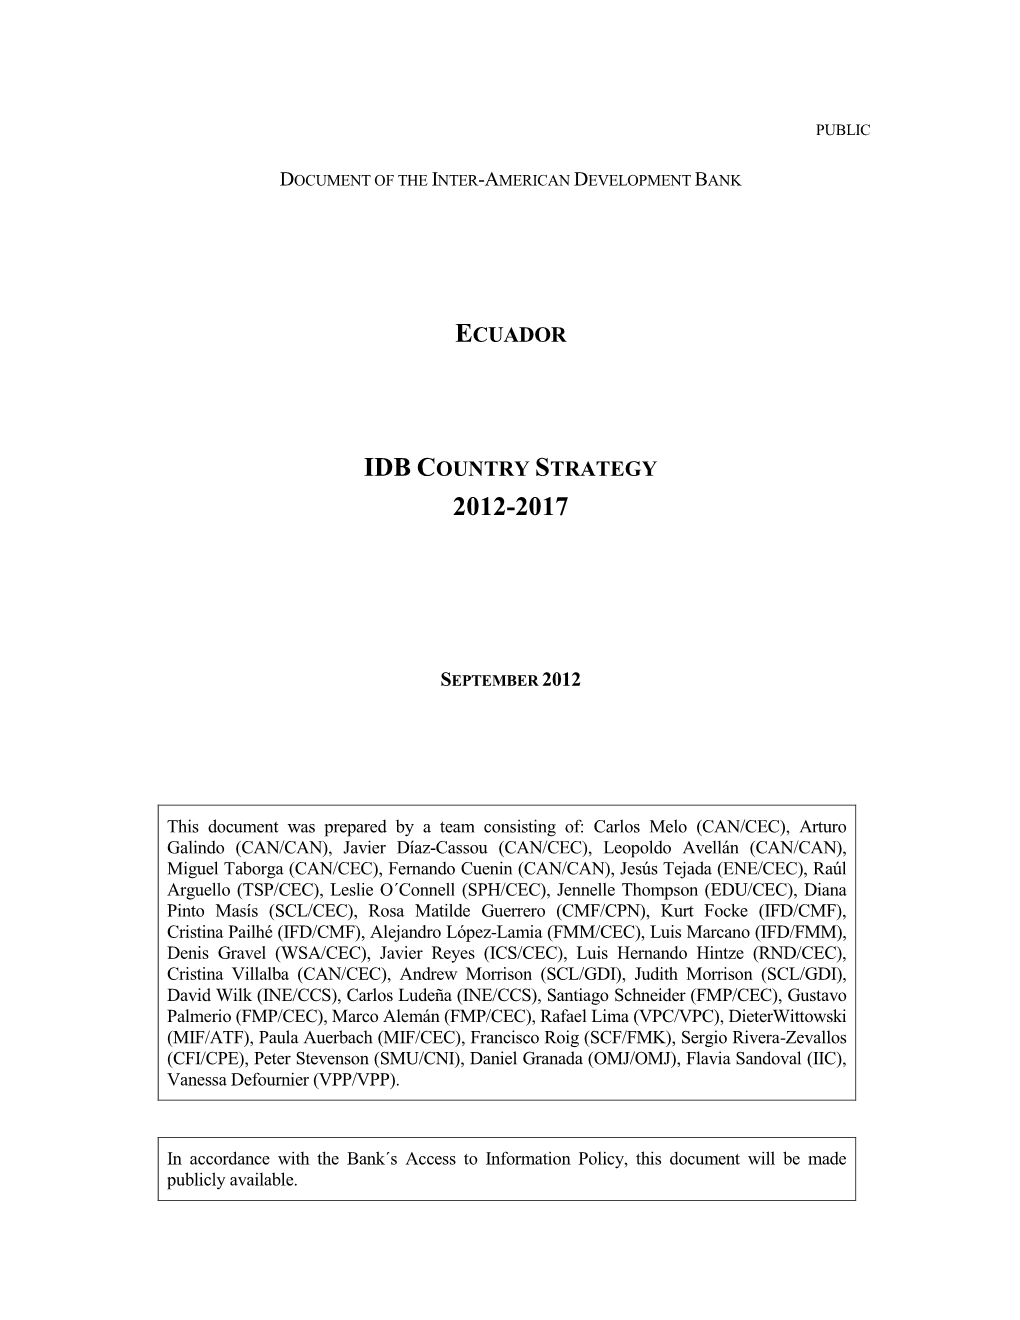 Document of the Inter-American Development Bank